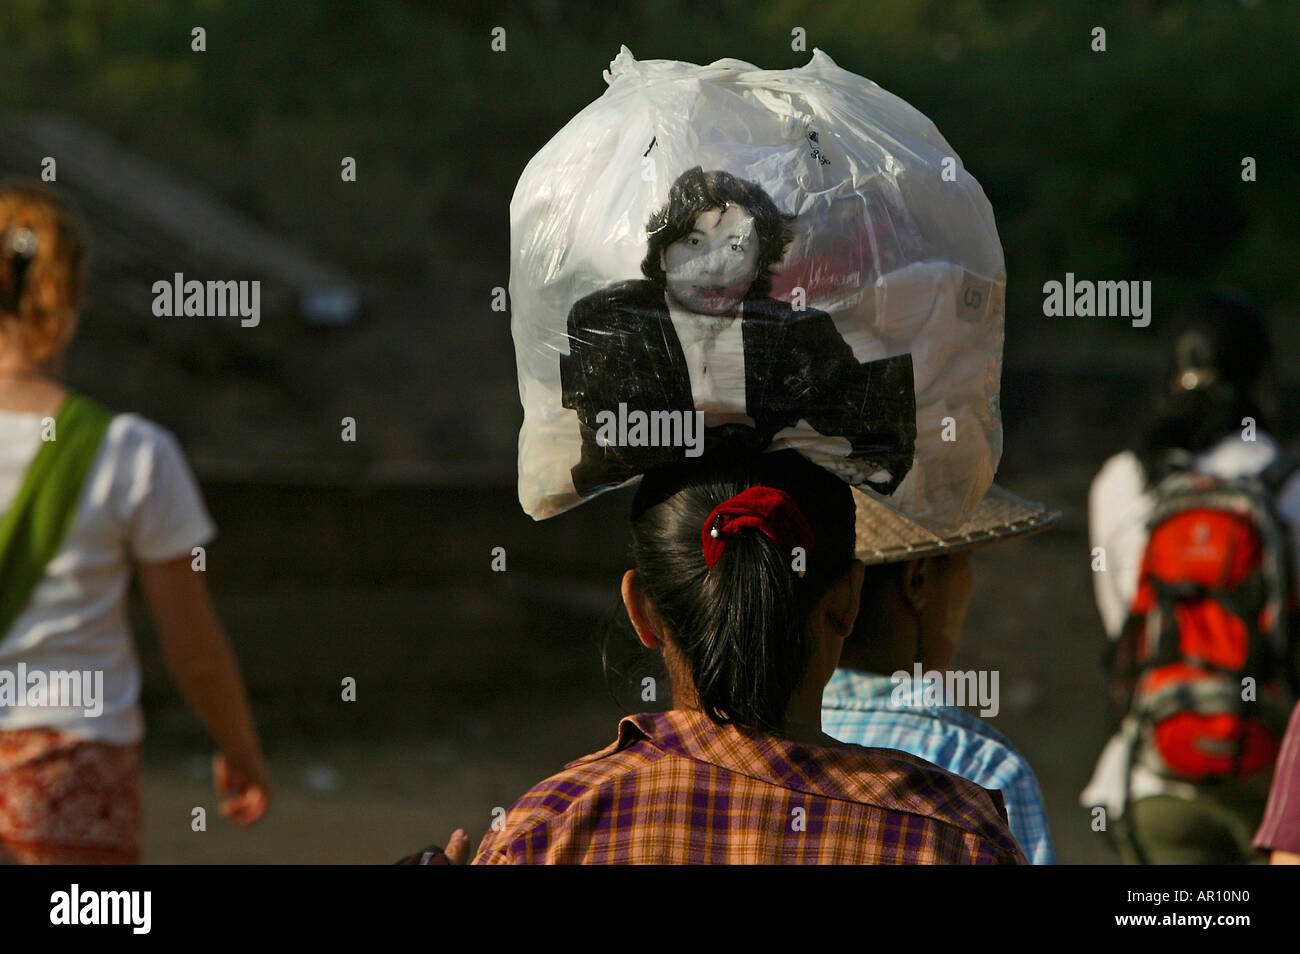 Women balancing plastic bag on head, Frau balanciert eine volle Plastikbeutel auf dem Kopf Stock Photo